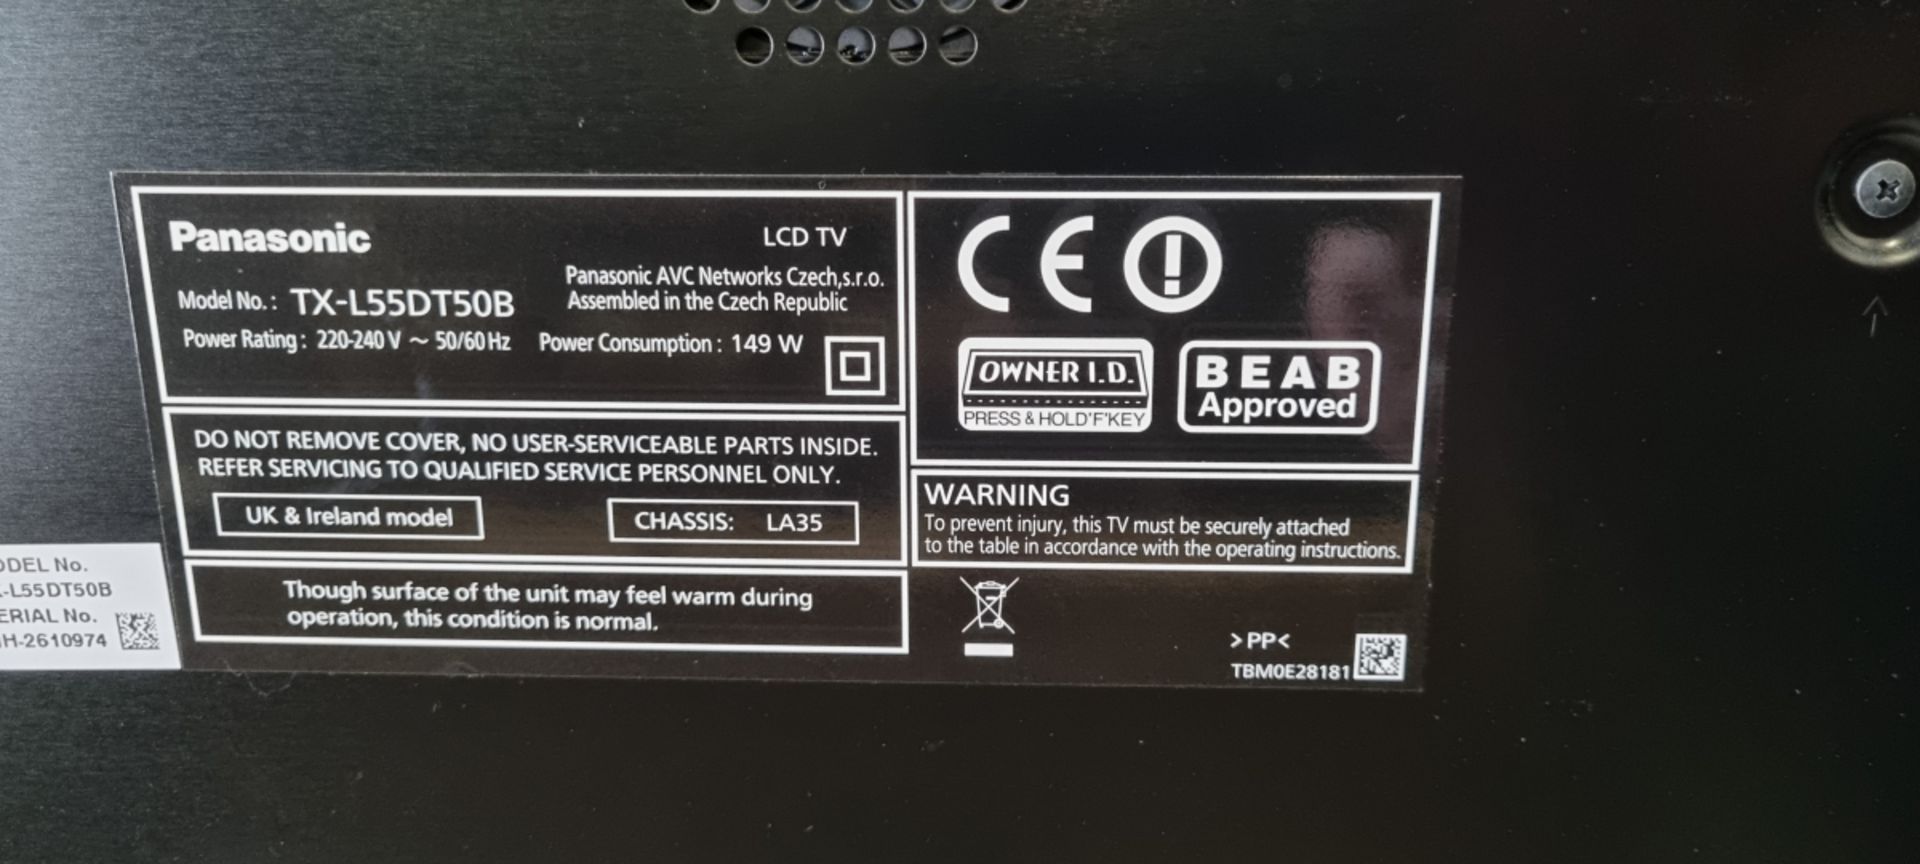 Panasonic TX-L55DT50B 55 inch full HD LED smart TV - NO STAND - Image 4 of 6